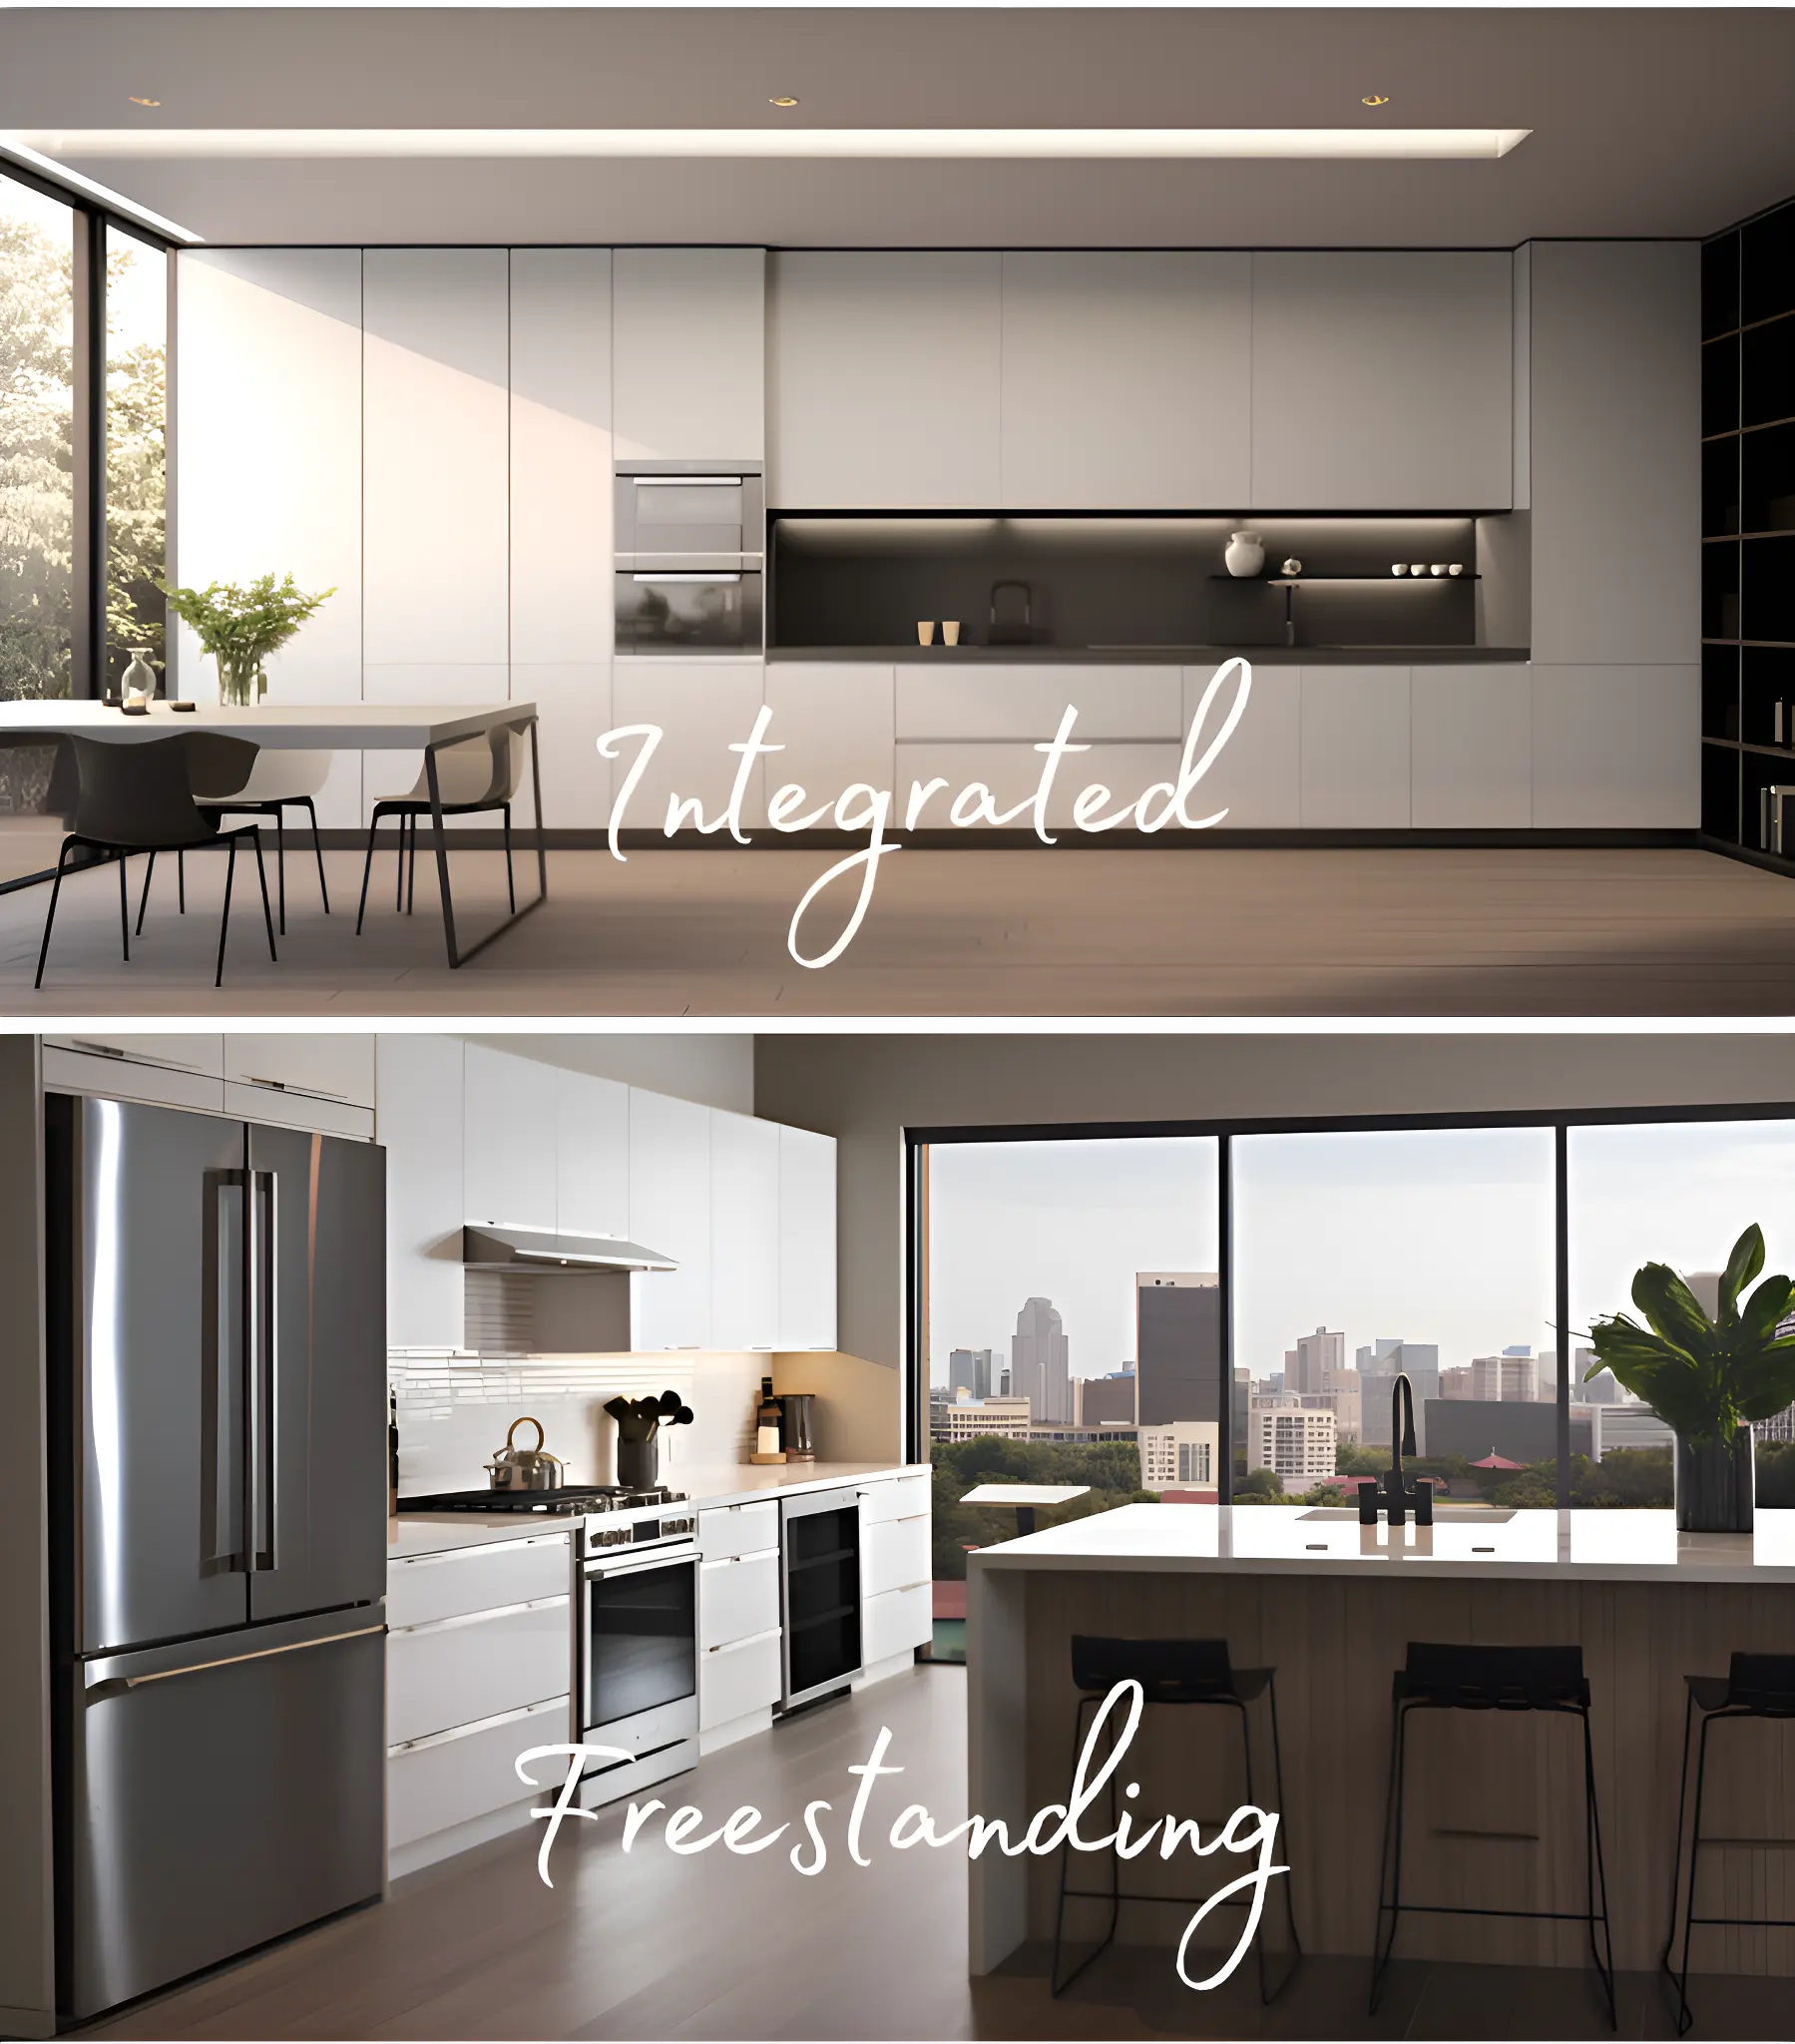 split image showing Integrated vs Freestanding appliances